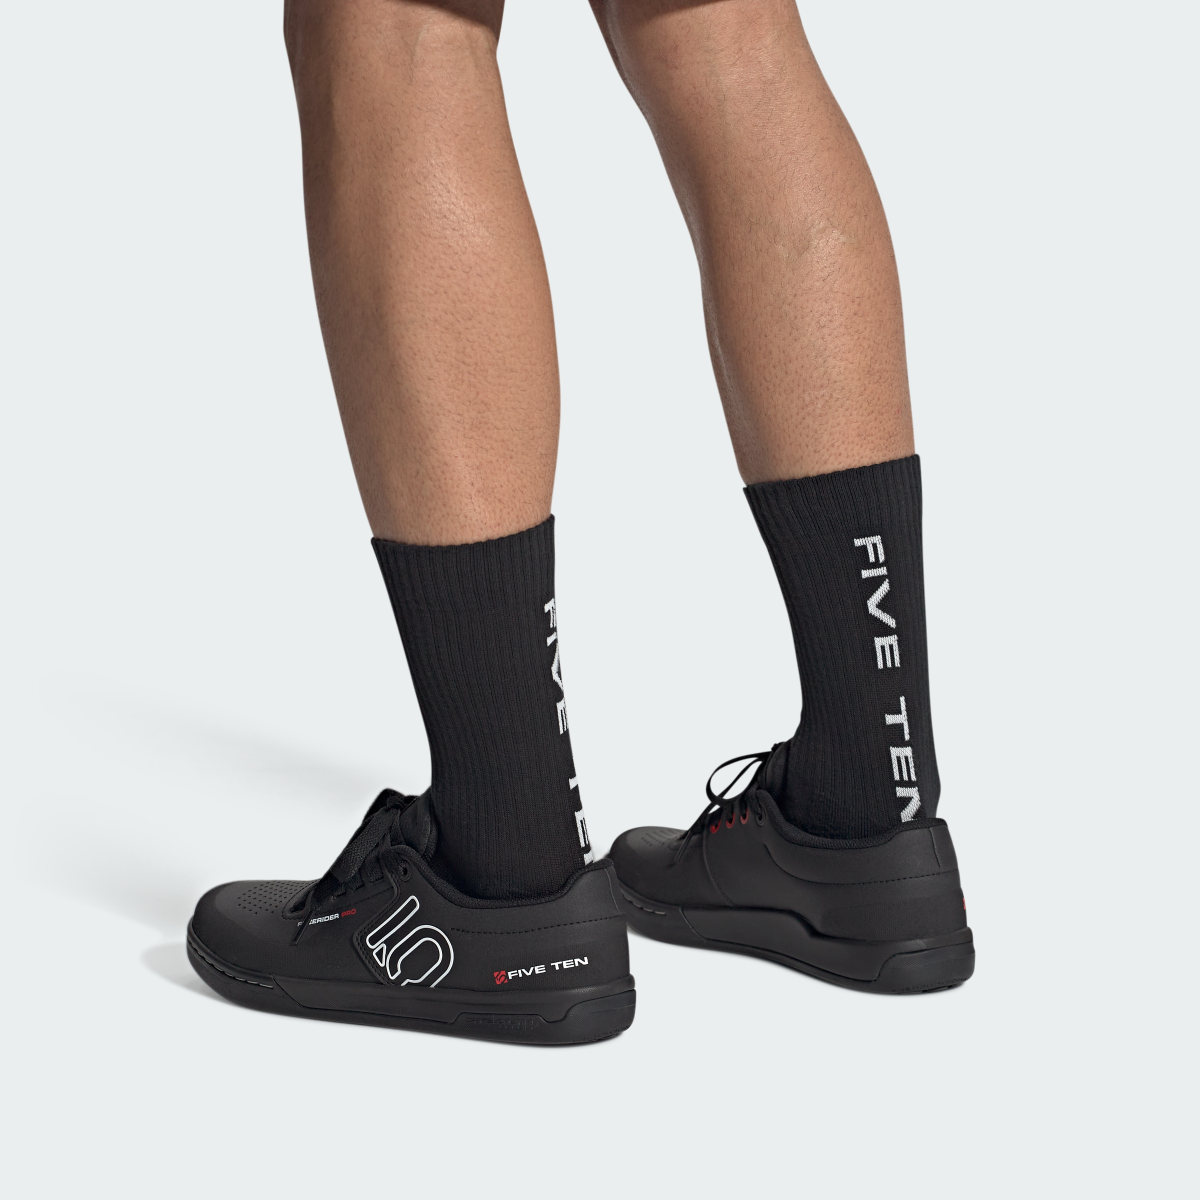 Adidas Sapatilhas de BTT Freerider Pro Five Ten. 5